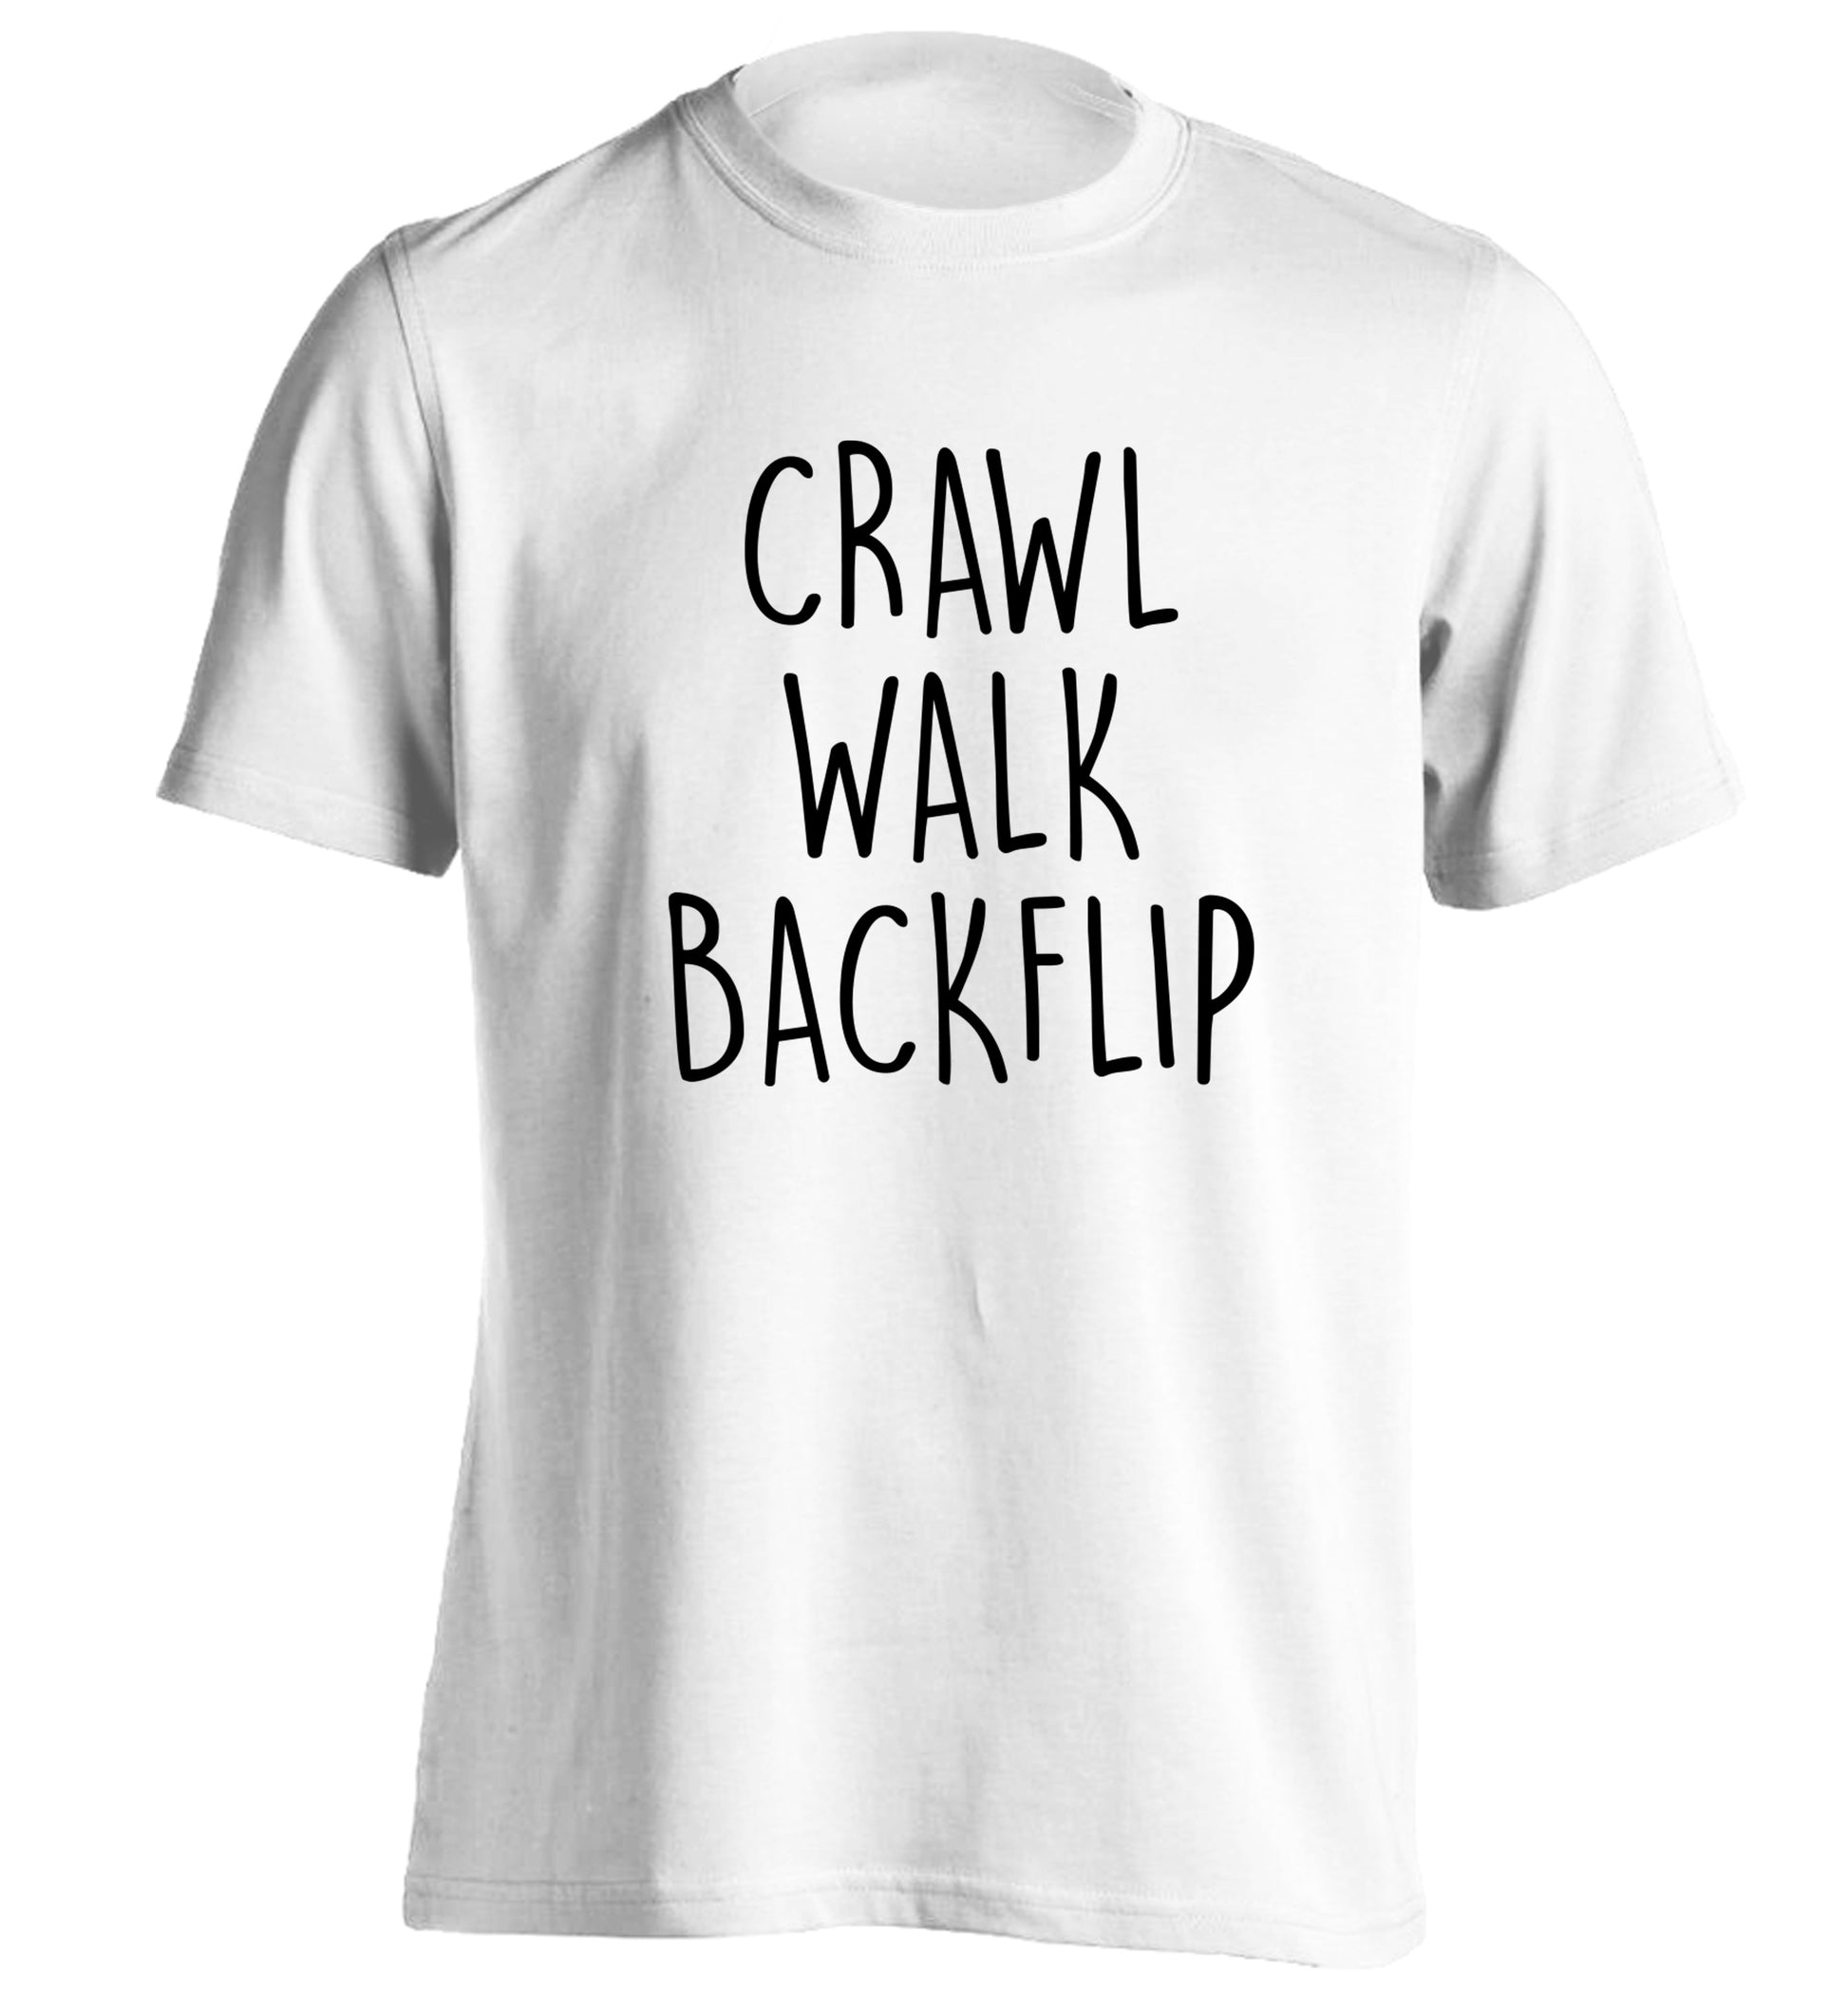 Crawl Walk Backflip adults unisex white Tshirt 2XL